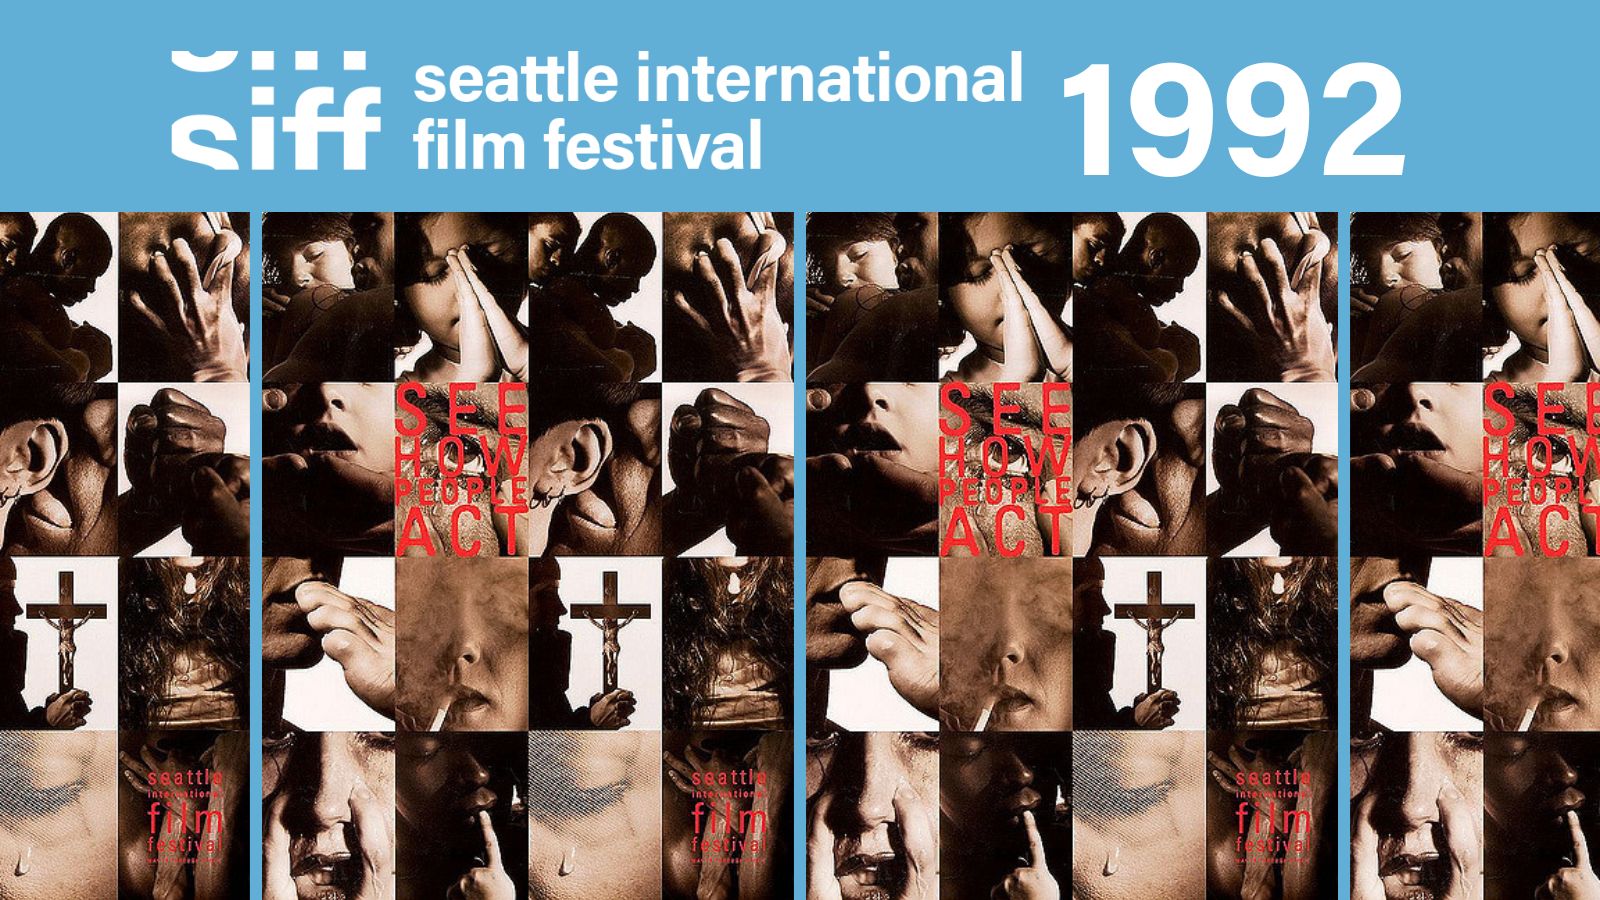 Seattle International Film Festival 1992